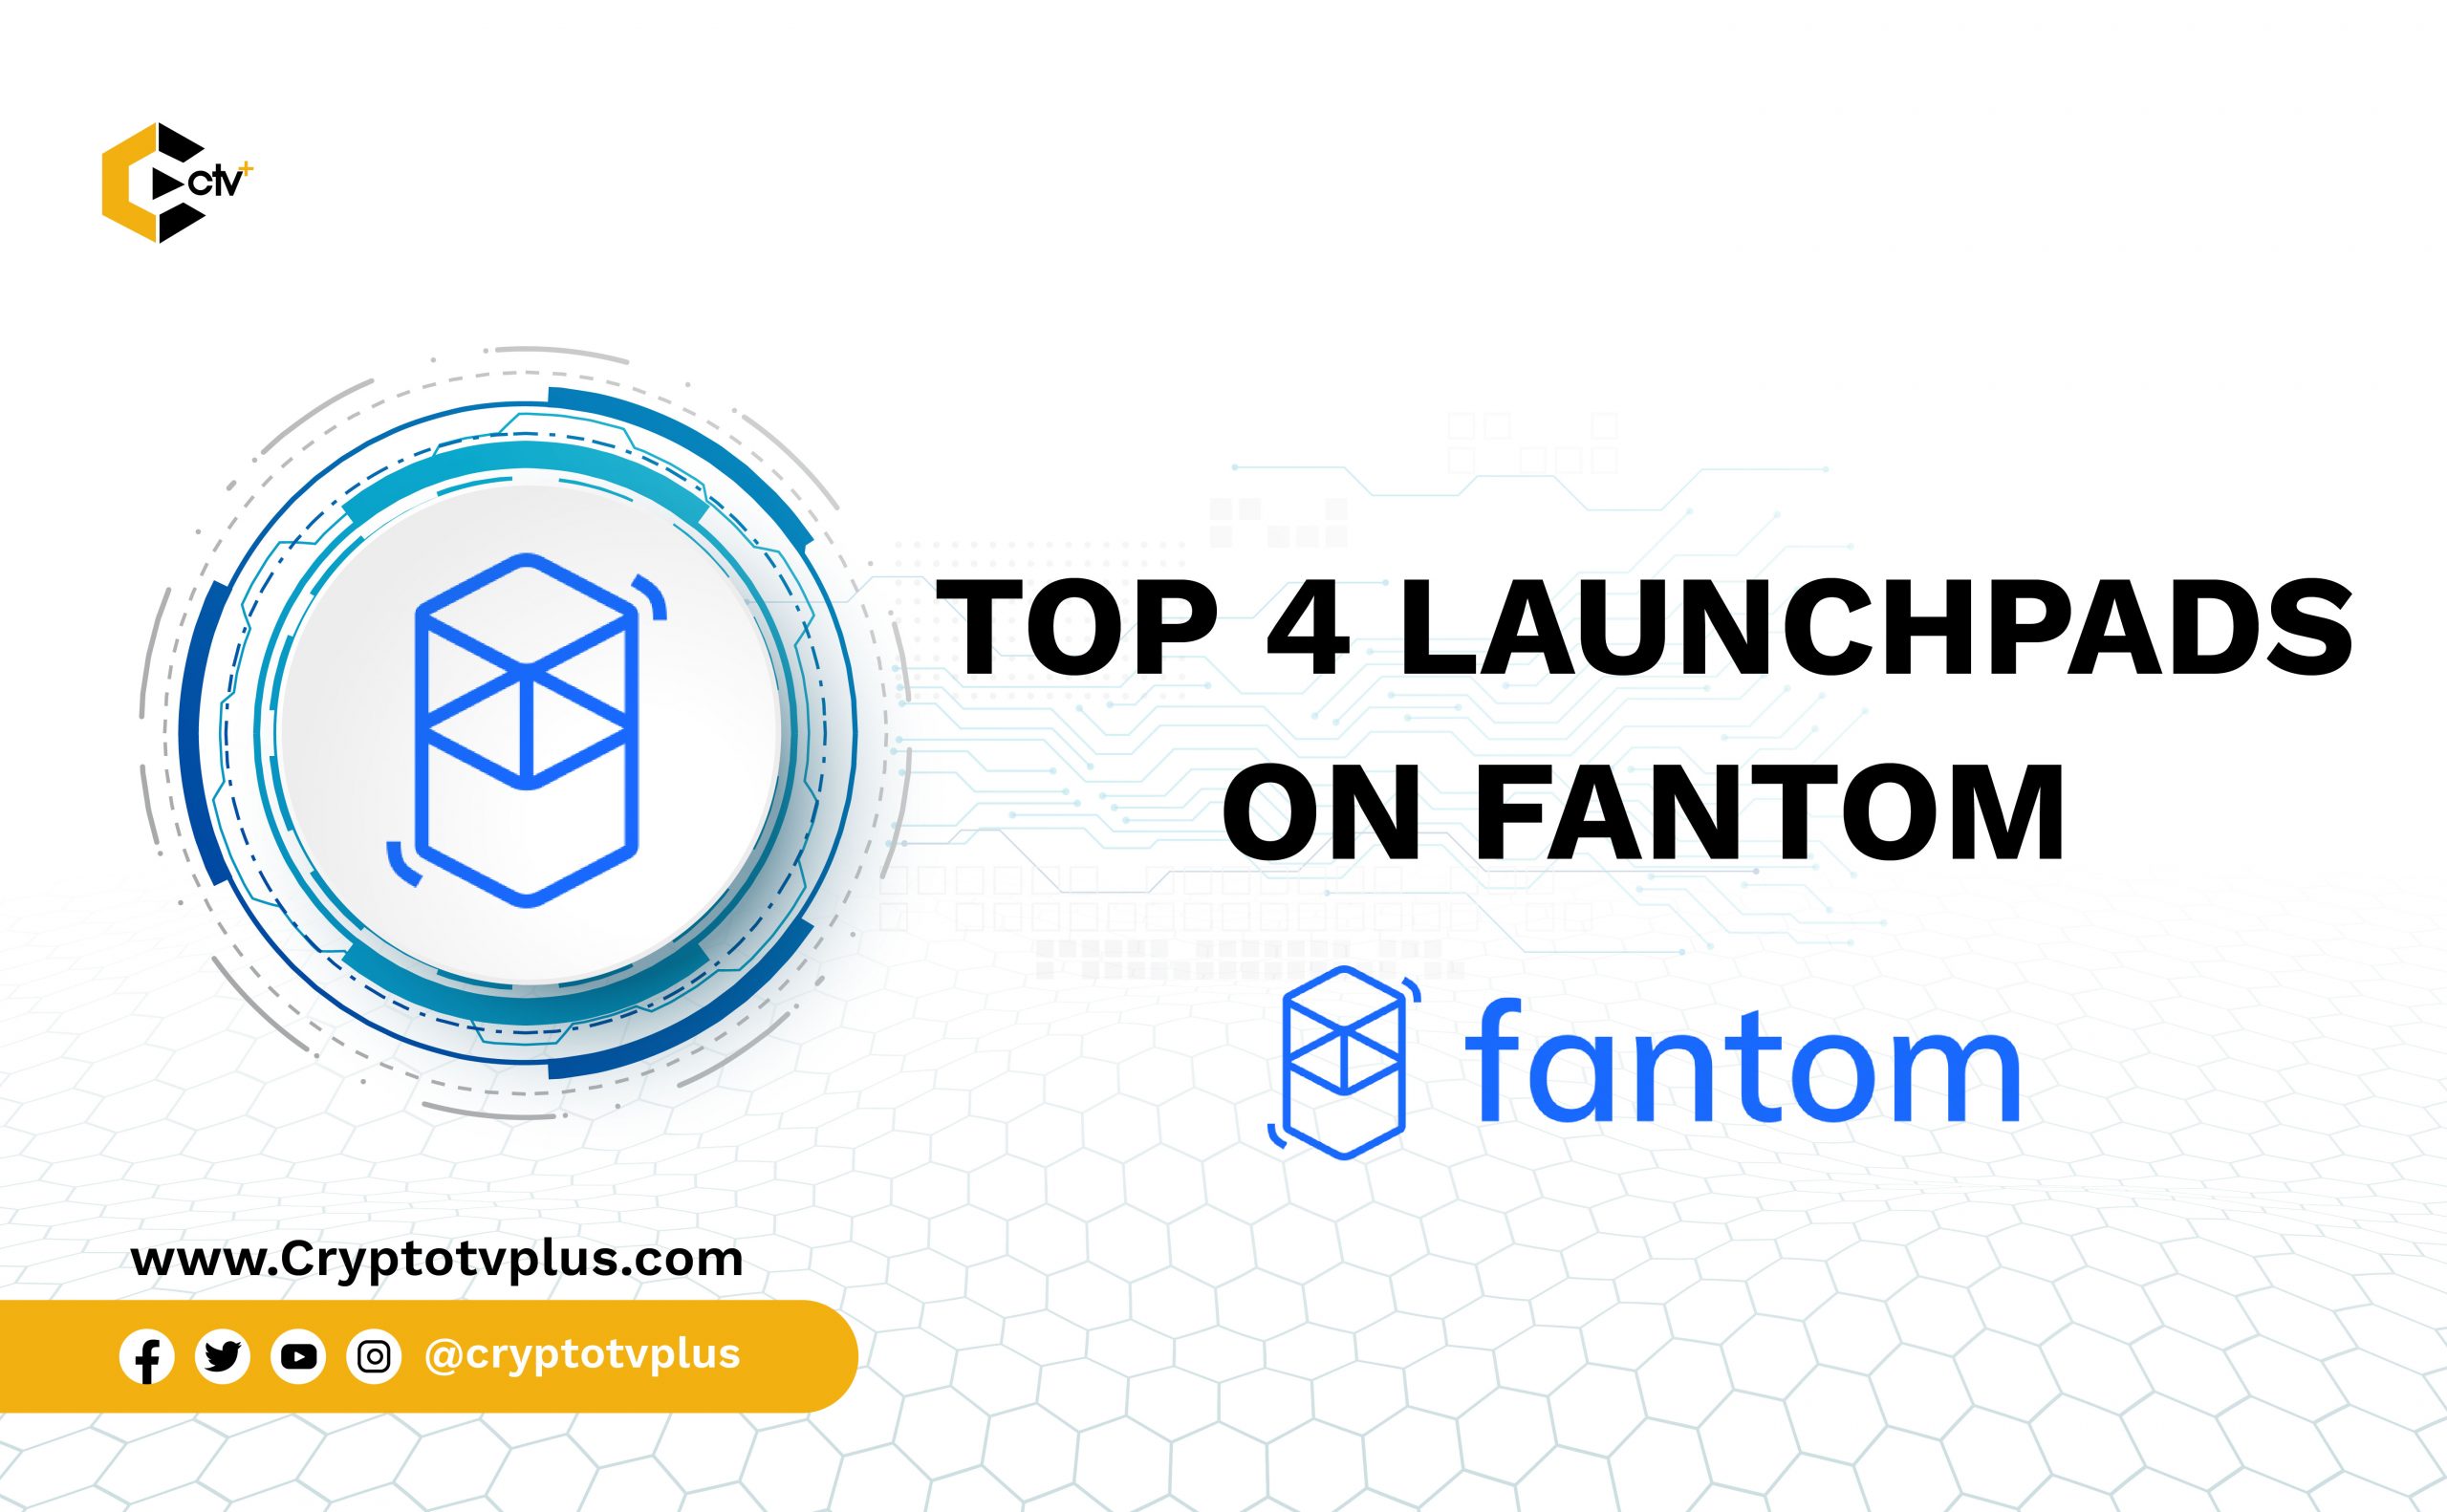 Top 4 Launchpads on Fantom